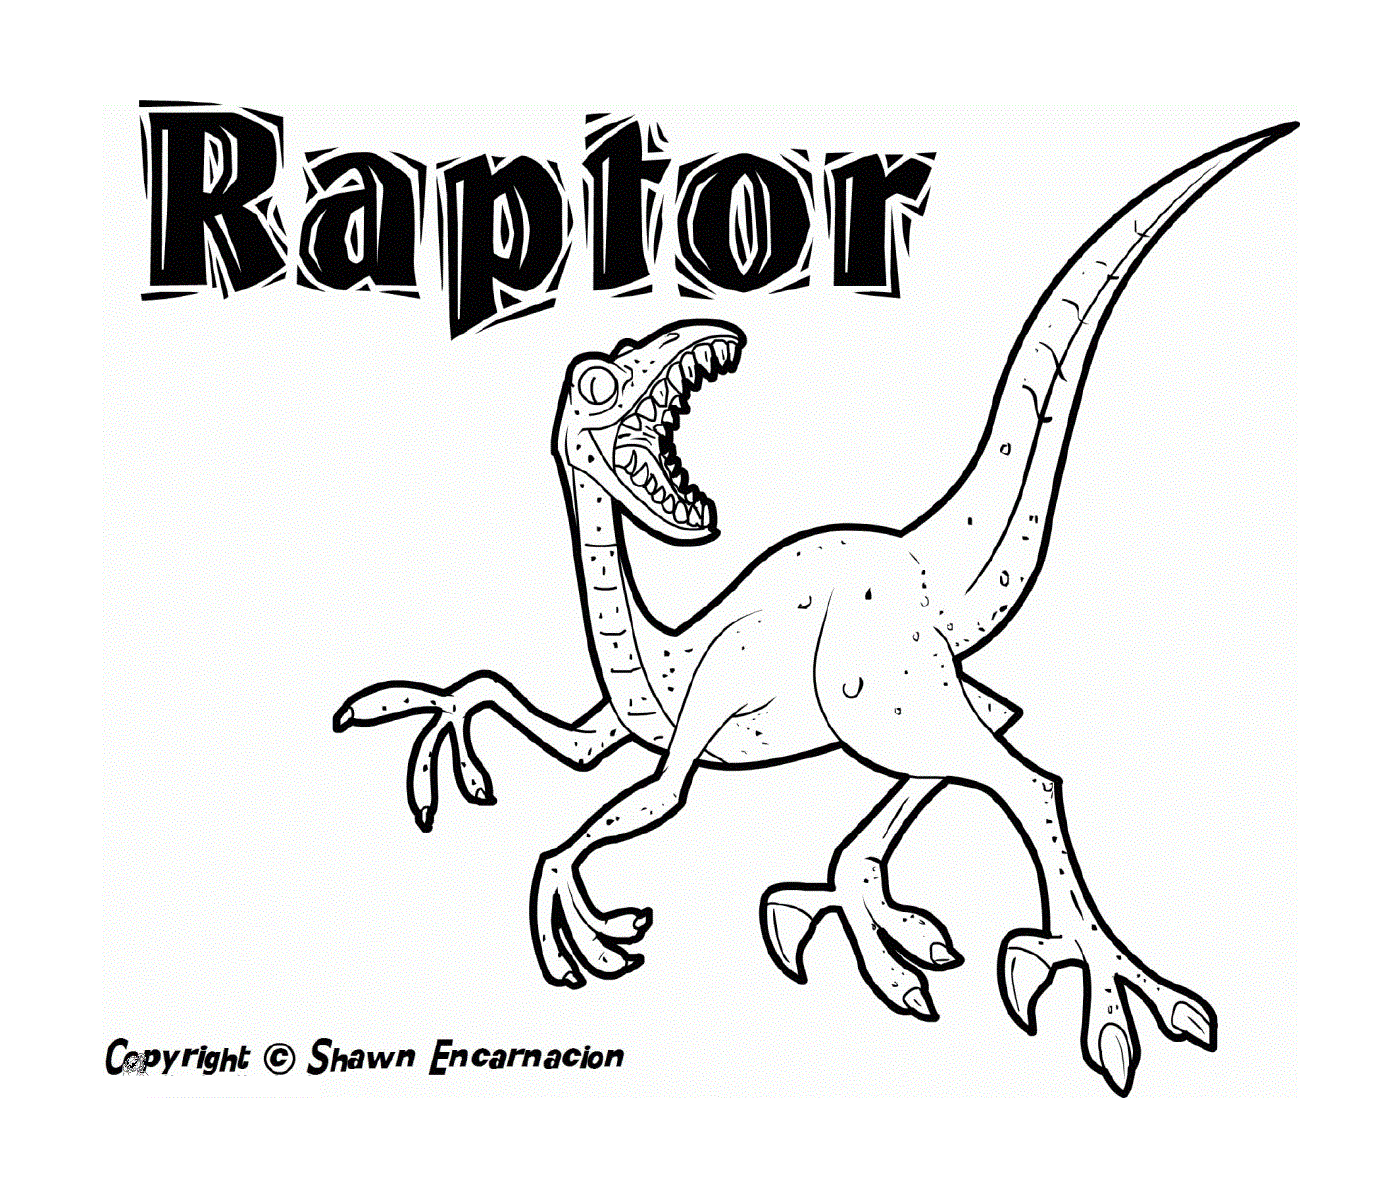  Raptor from Jurassic Park, agile predator 